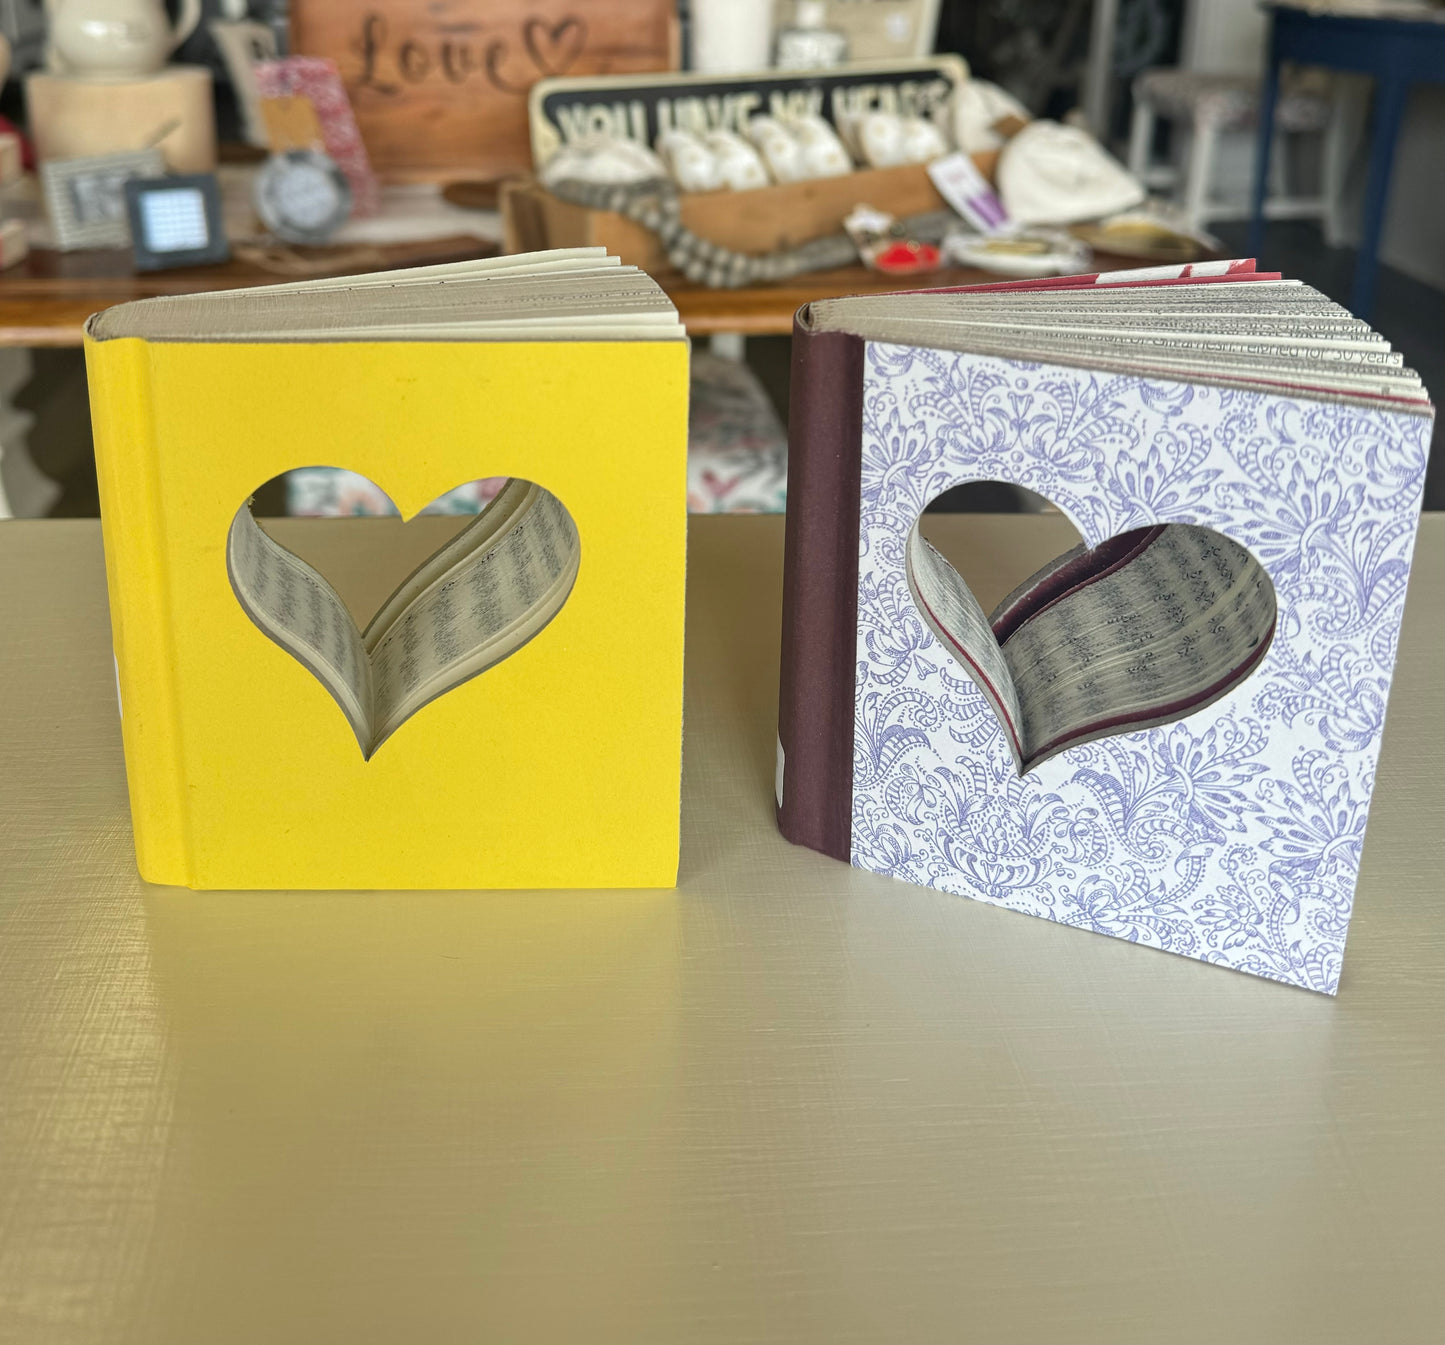 Heart cut out books